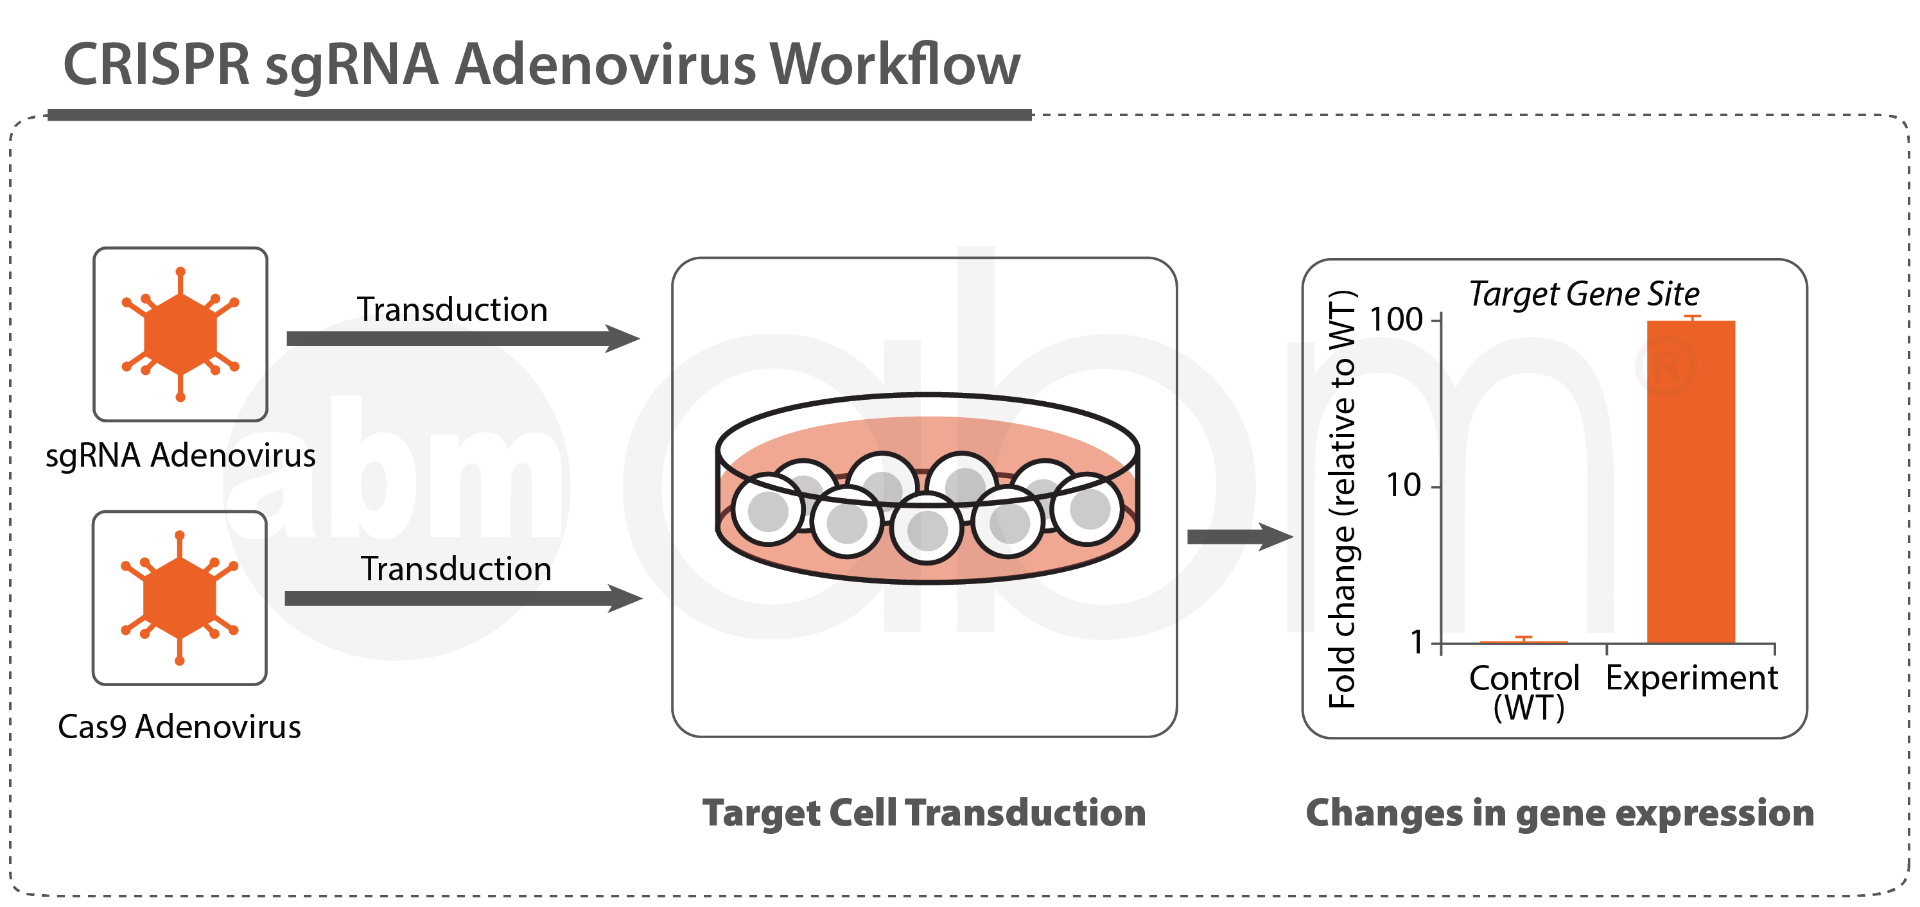 CRISPR sgRNA Adenovirus Workflow